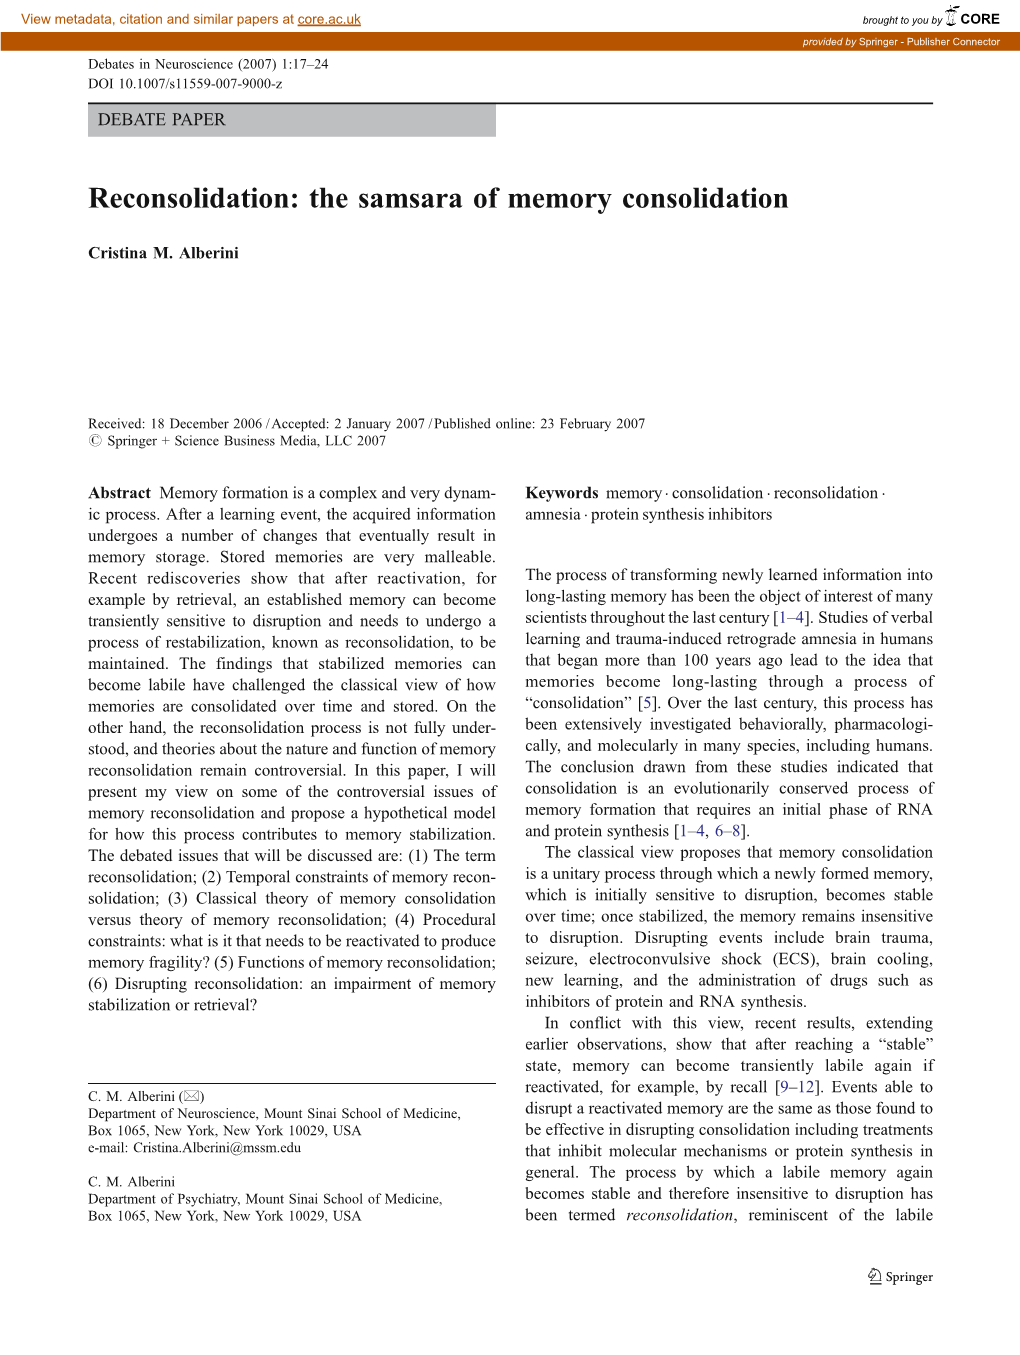 Reconsolidation: the Samsara of Memory Consolidation